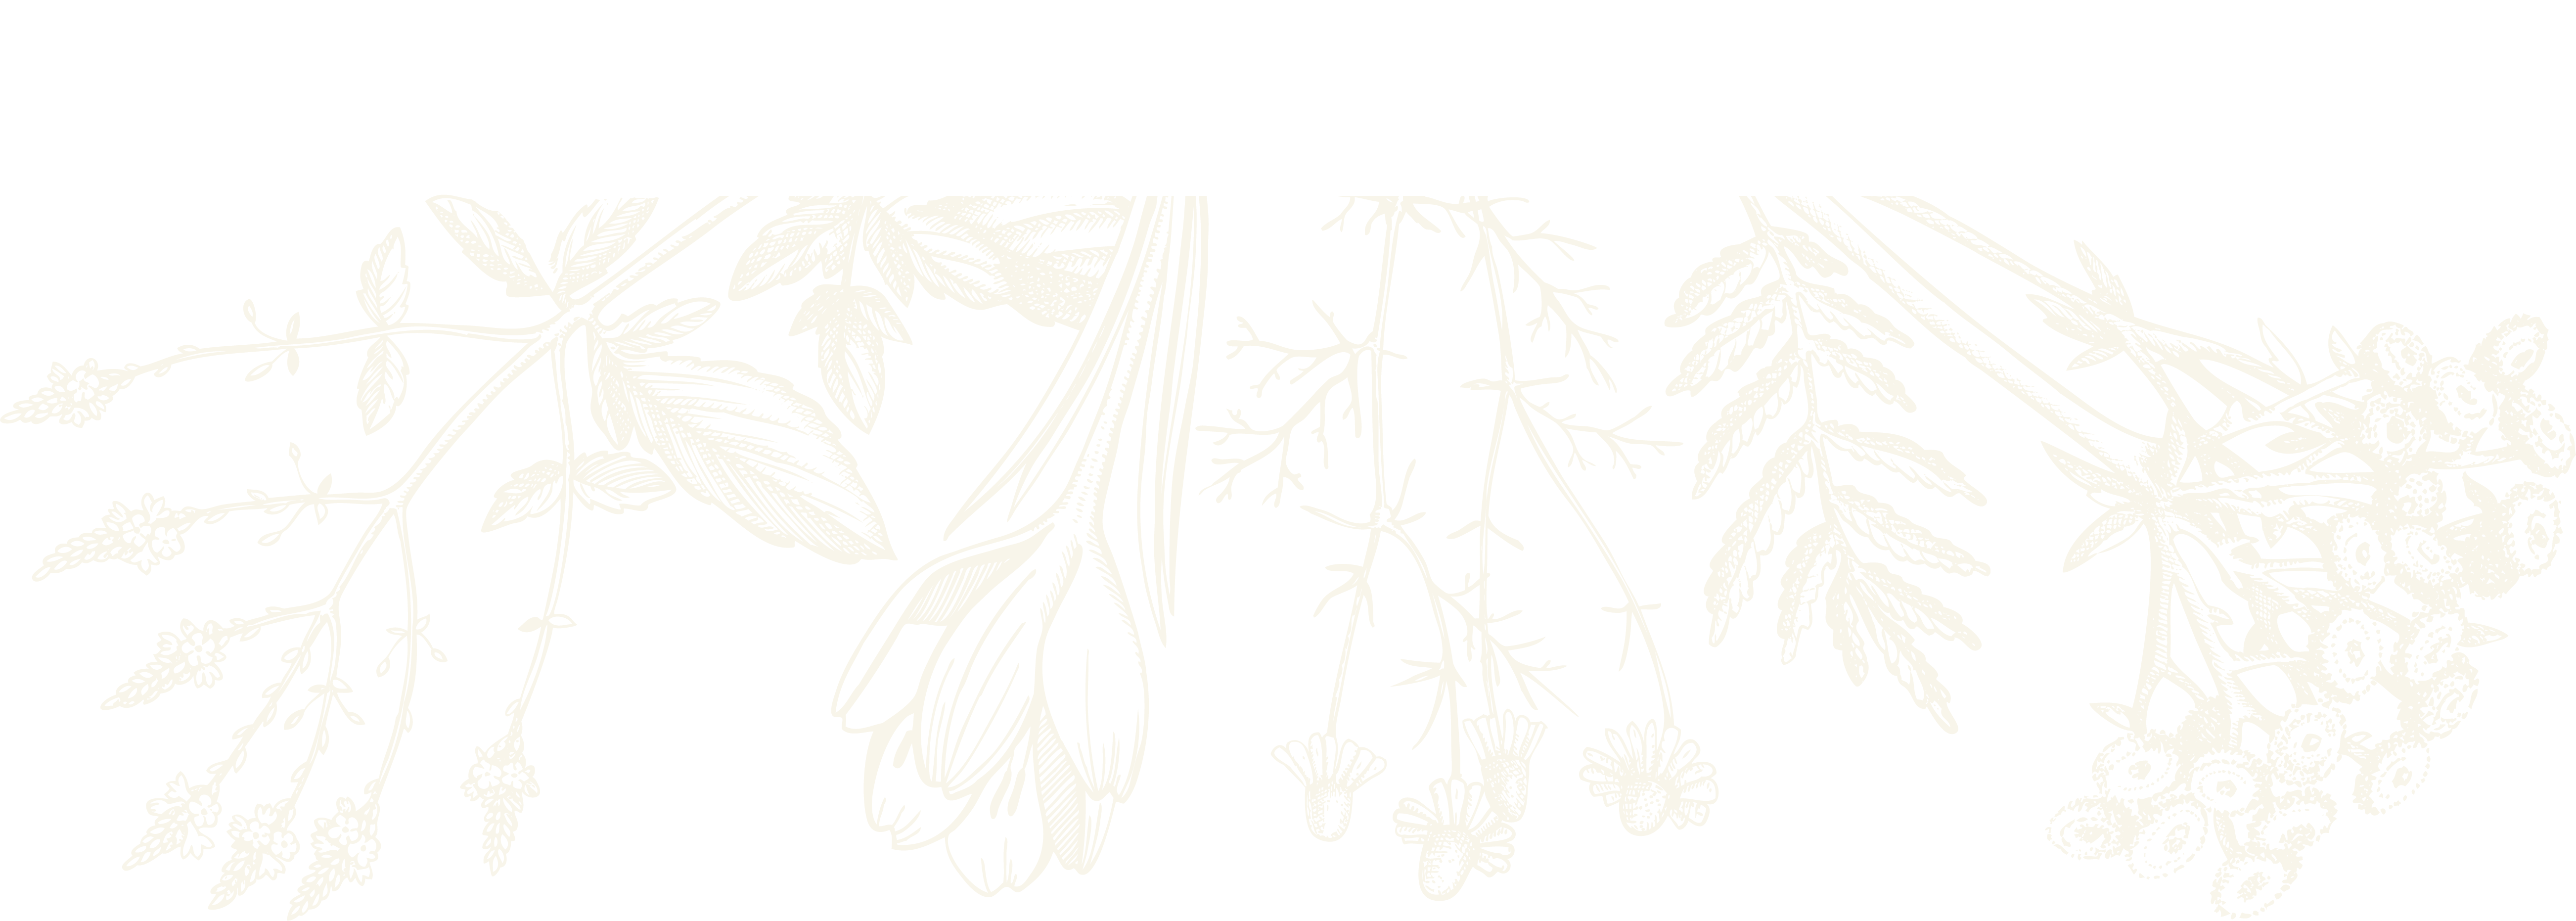 botanical sketch school of herbal medicine